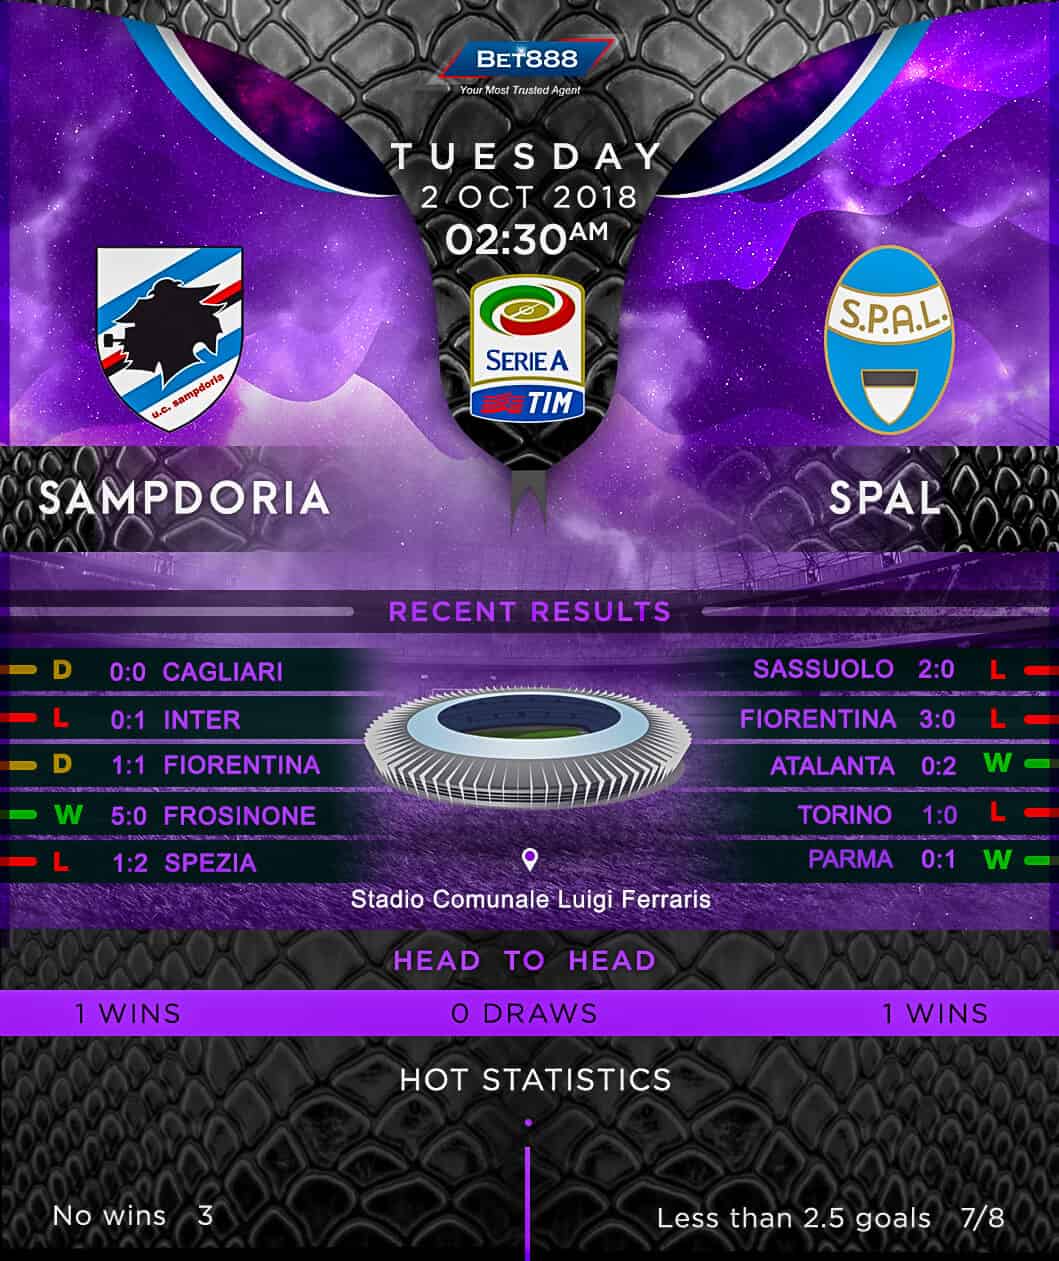 Sampdoria vs SPAL 02/10/18